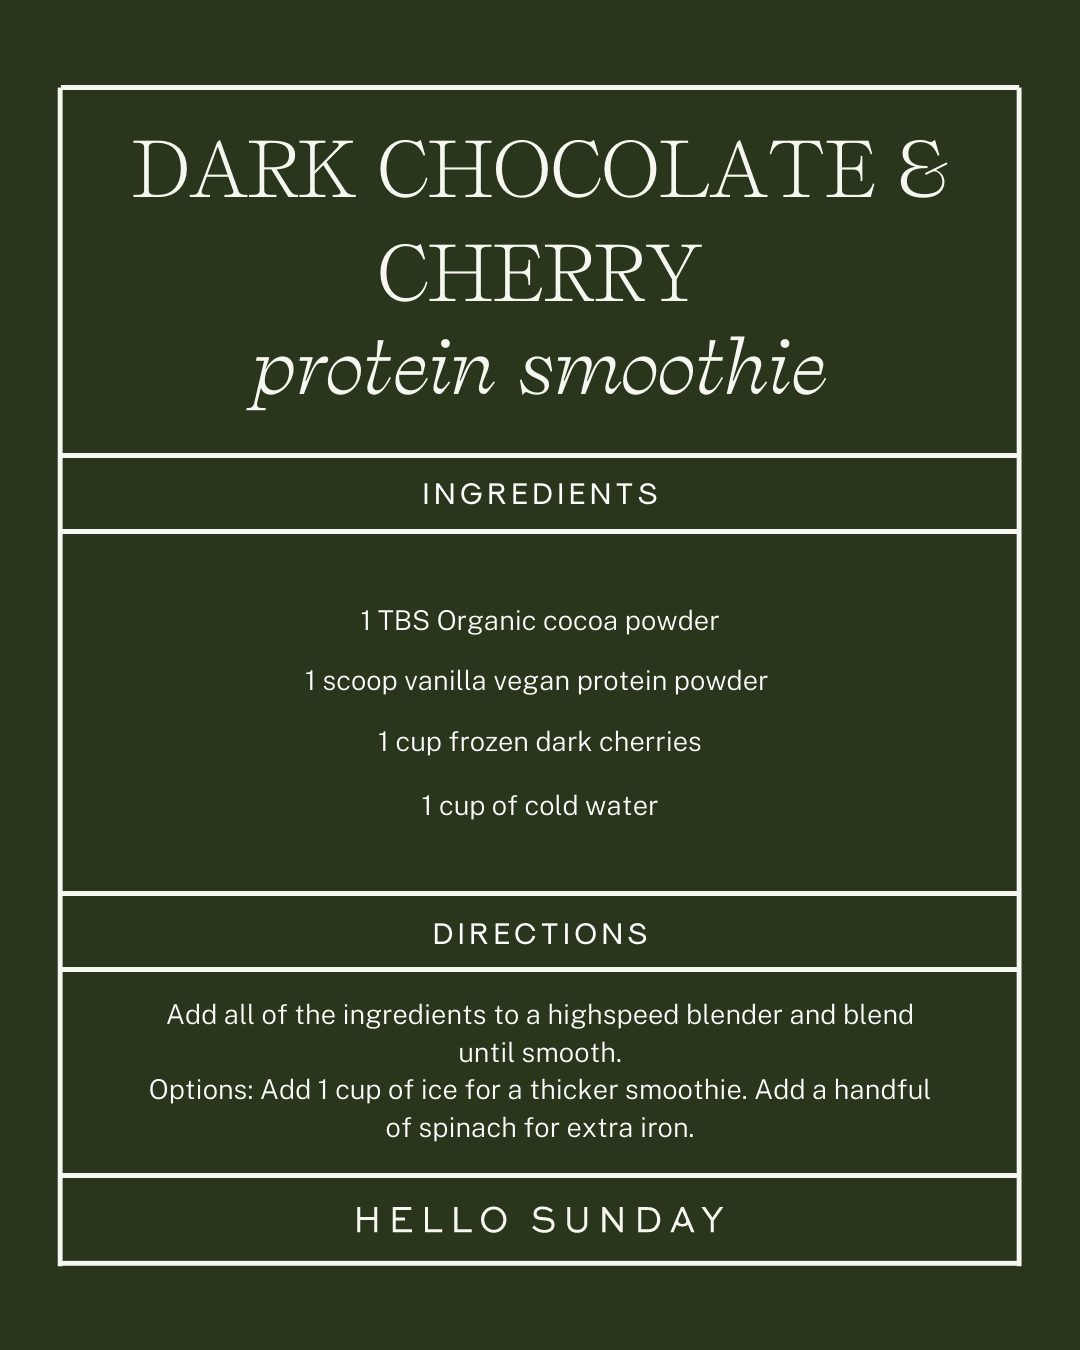 Dark chocolate and cherry smoothie recipe card